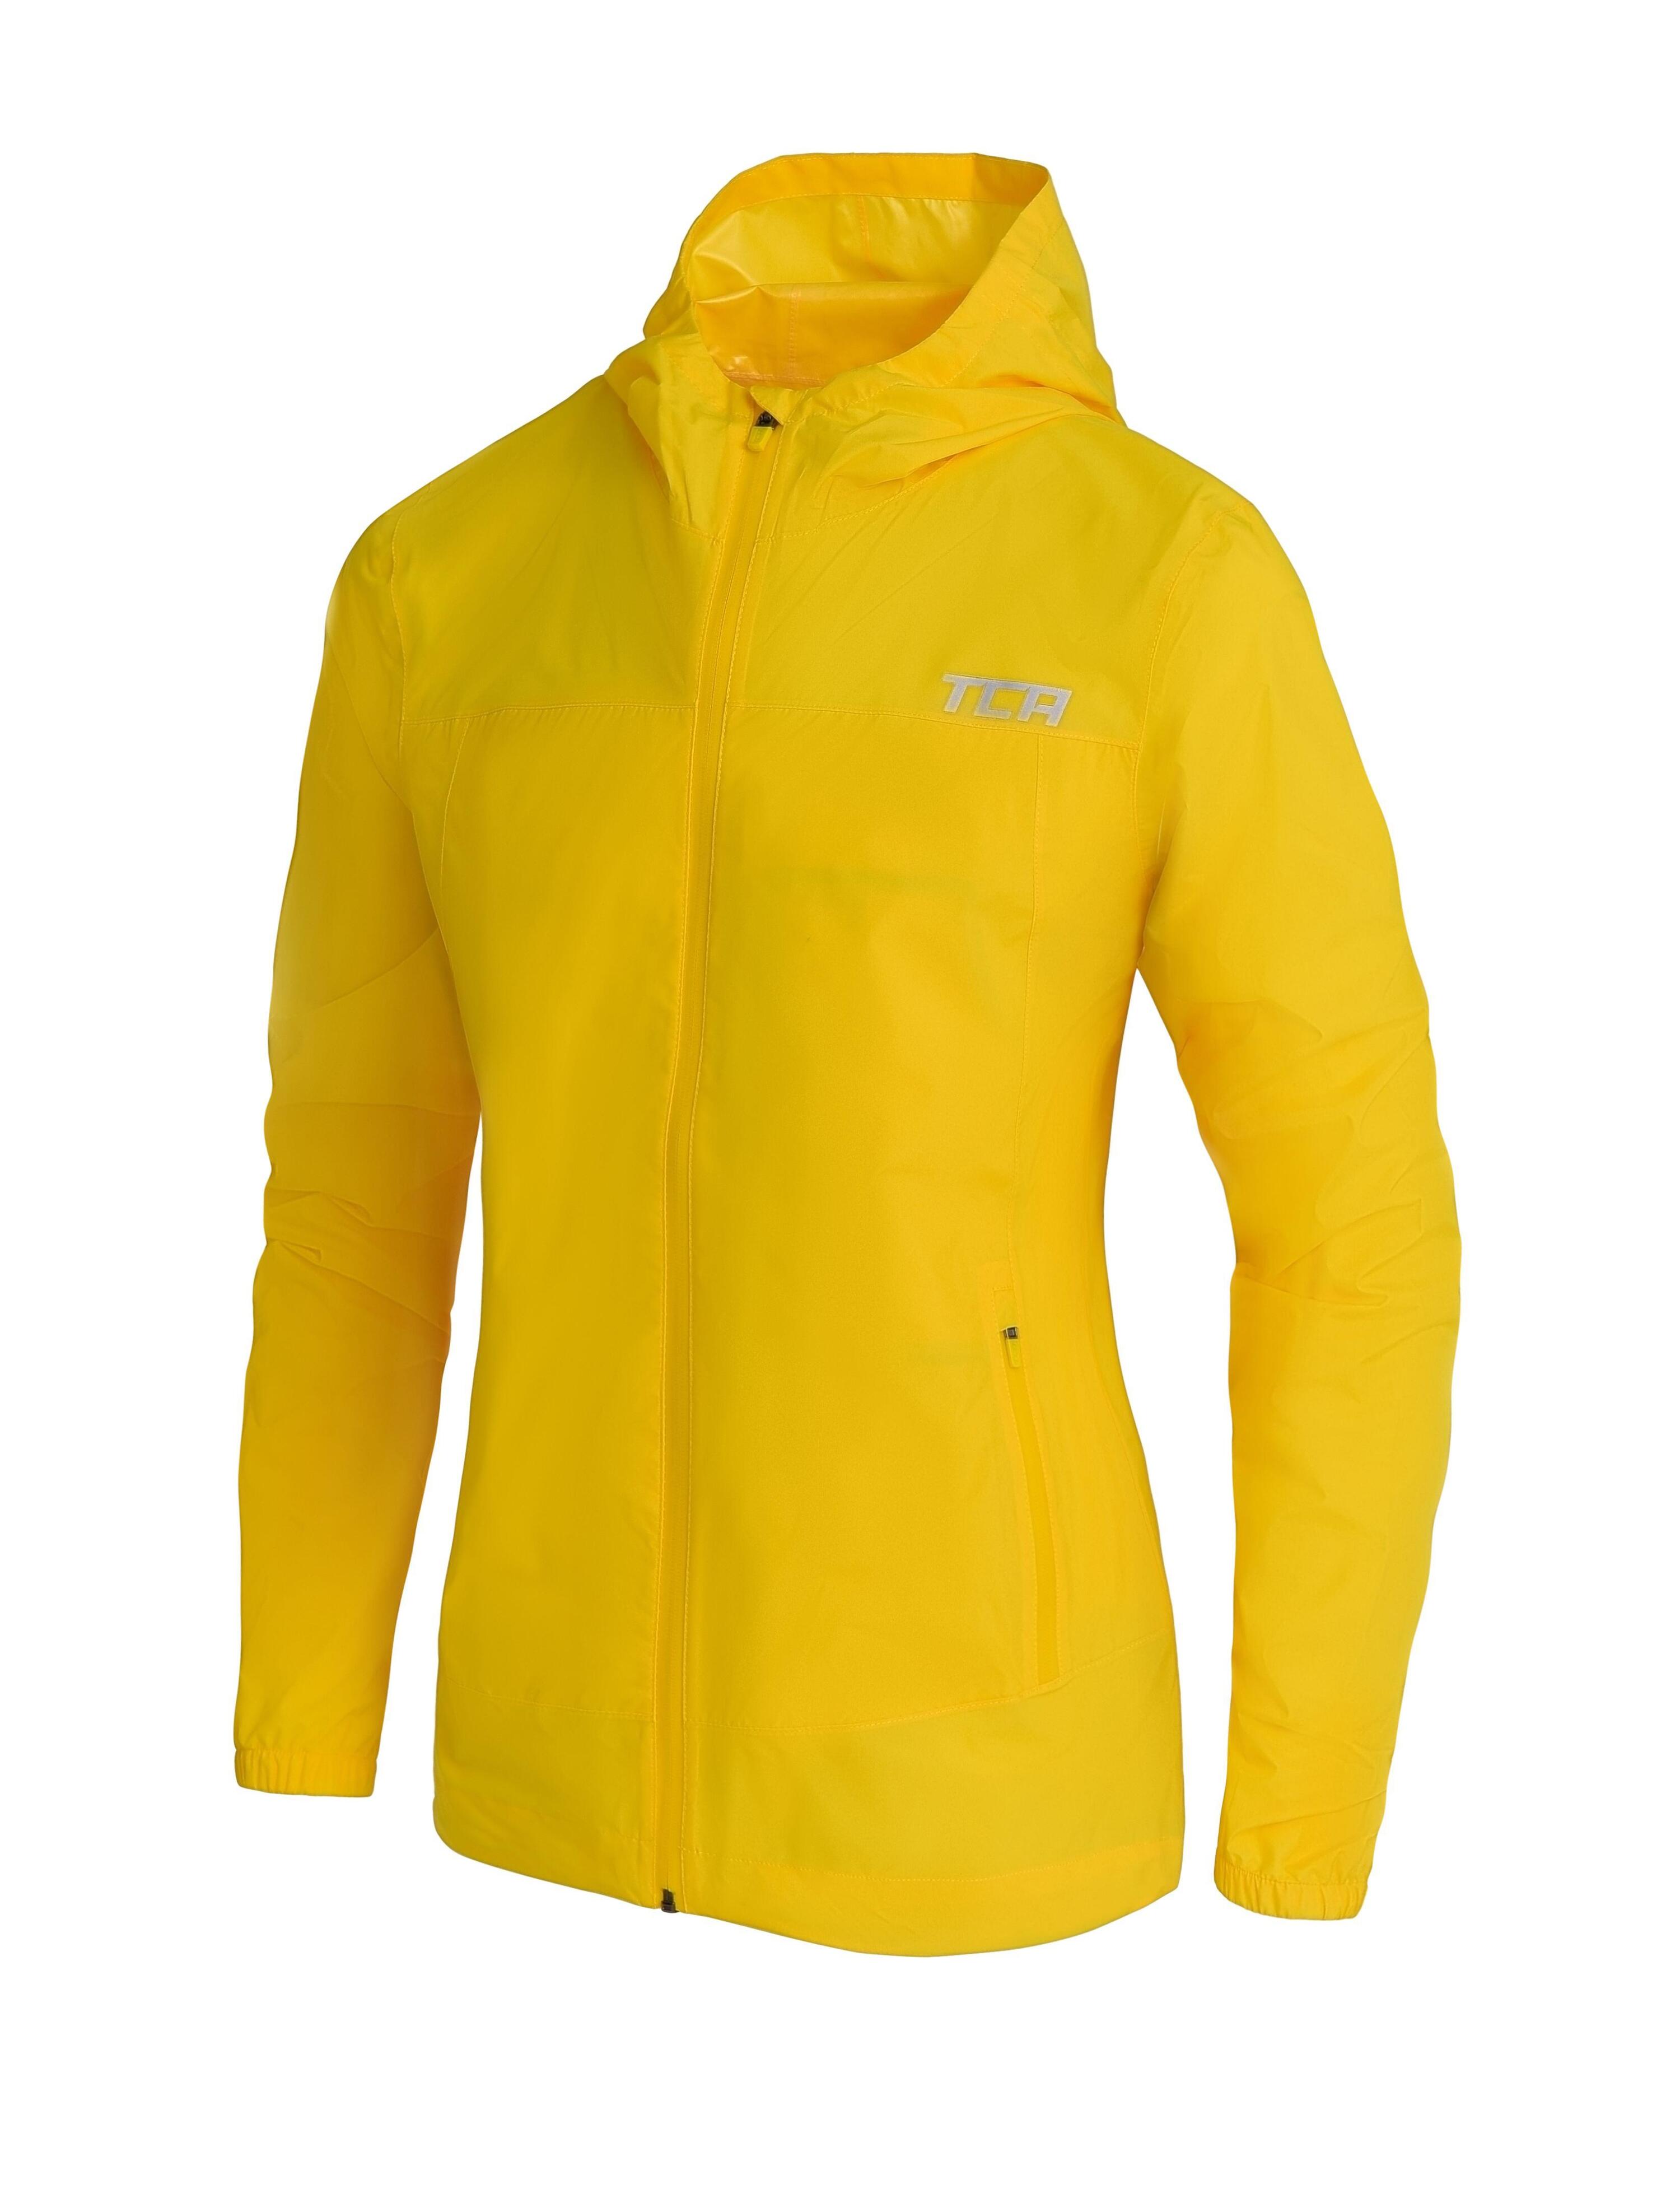 Men's AirLite Rain Jacket with Zip Pockets - Vibrant Yellow 1/5